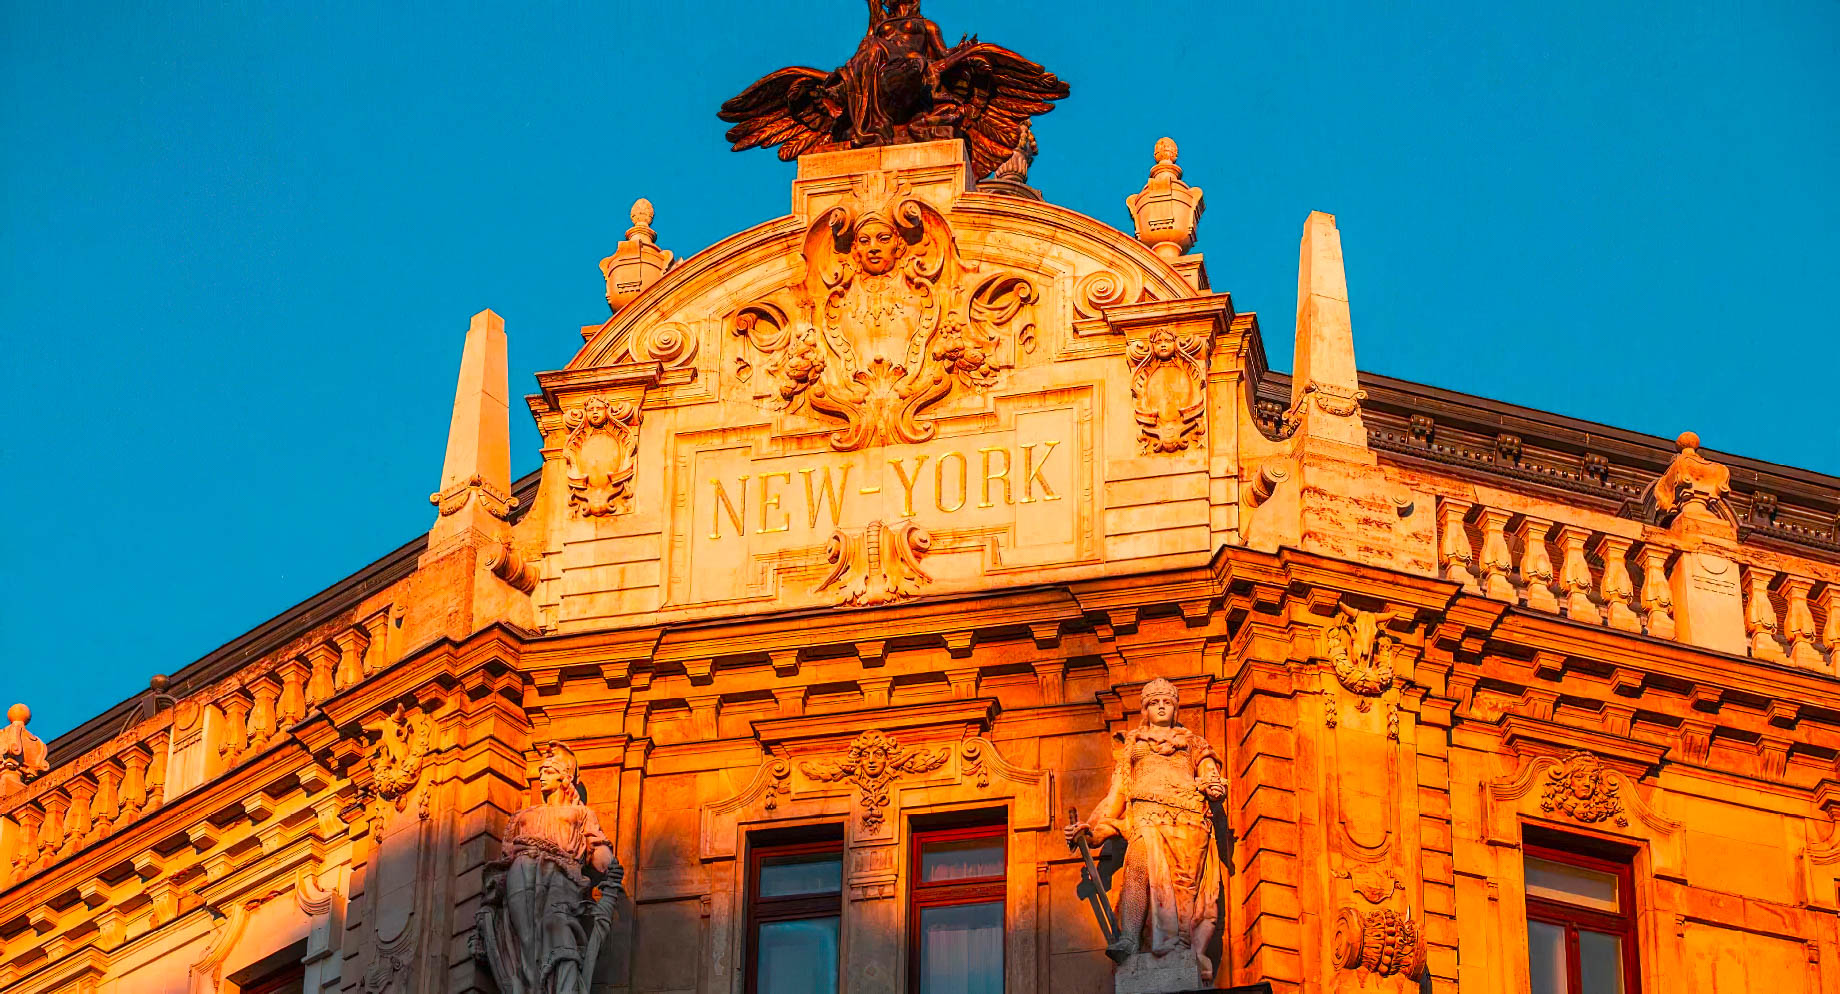 Anantara New York Palace Budapest Hotel - Hungary - Hotel Exterior Decor